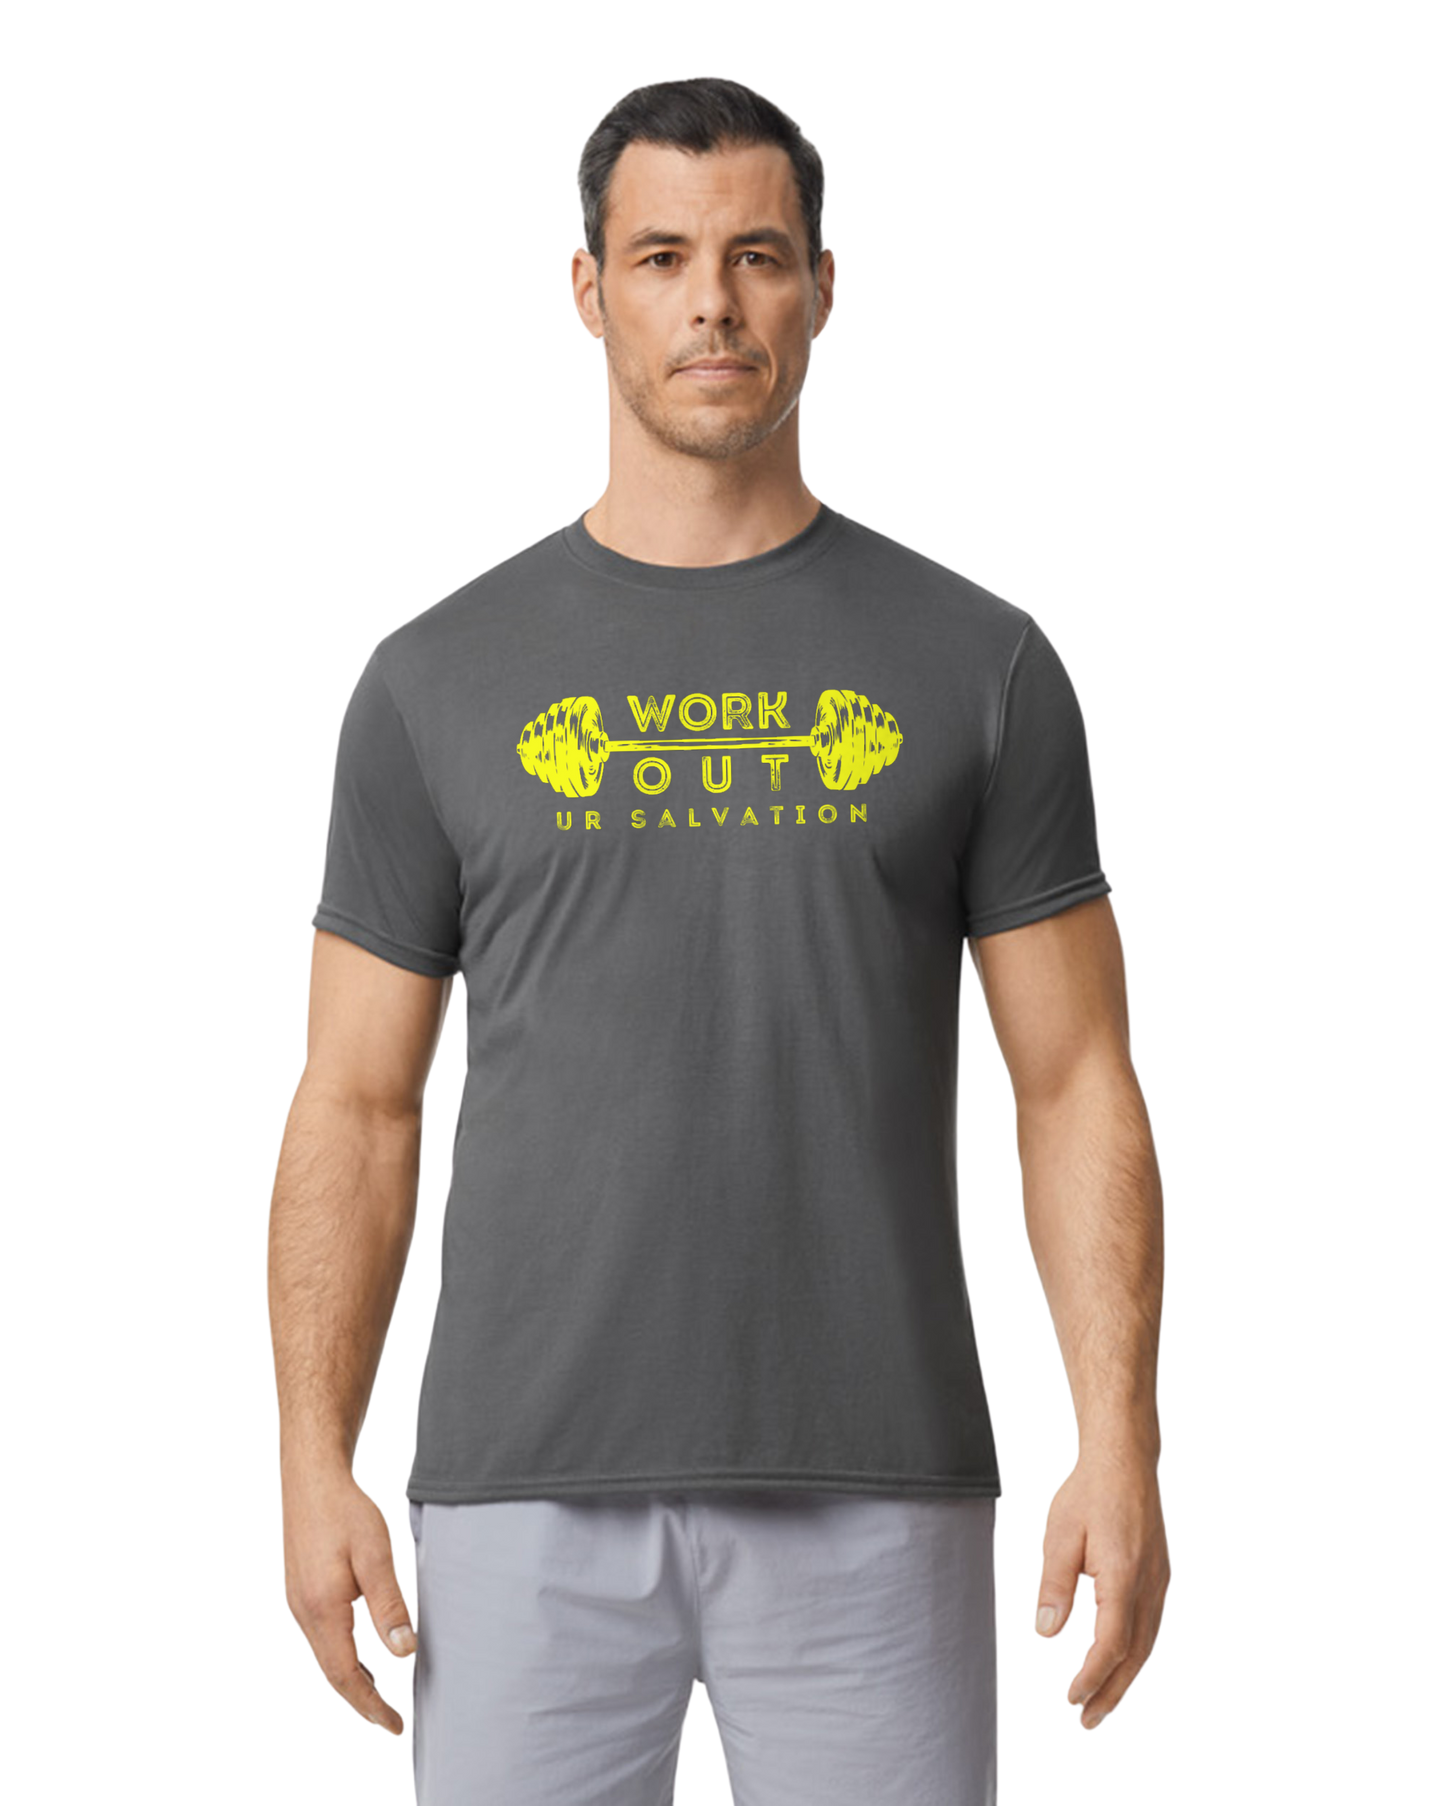 Work Out UR Salvation Men's Performance Shirt